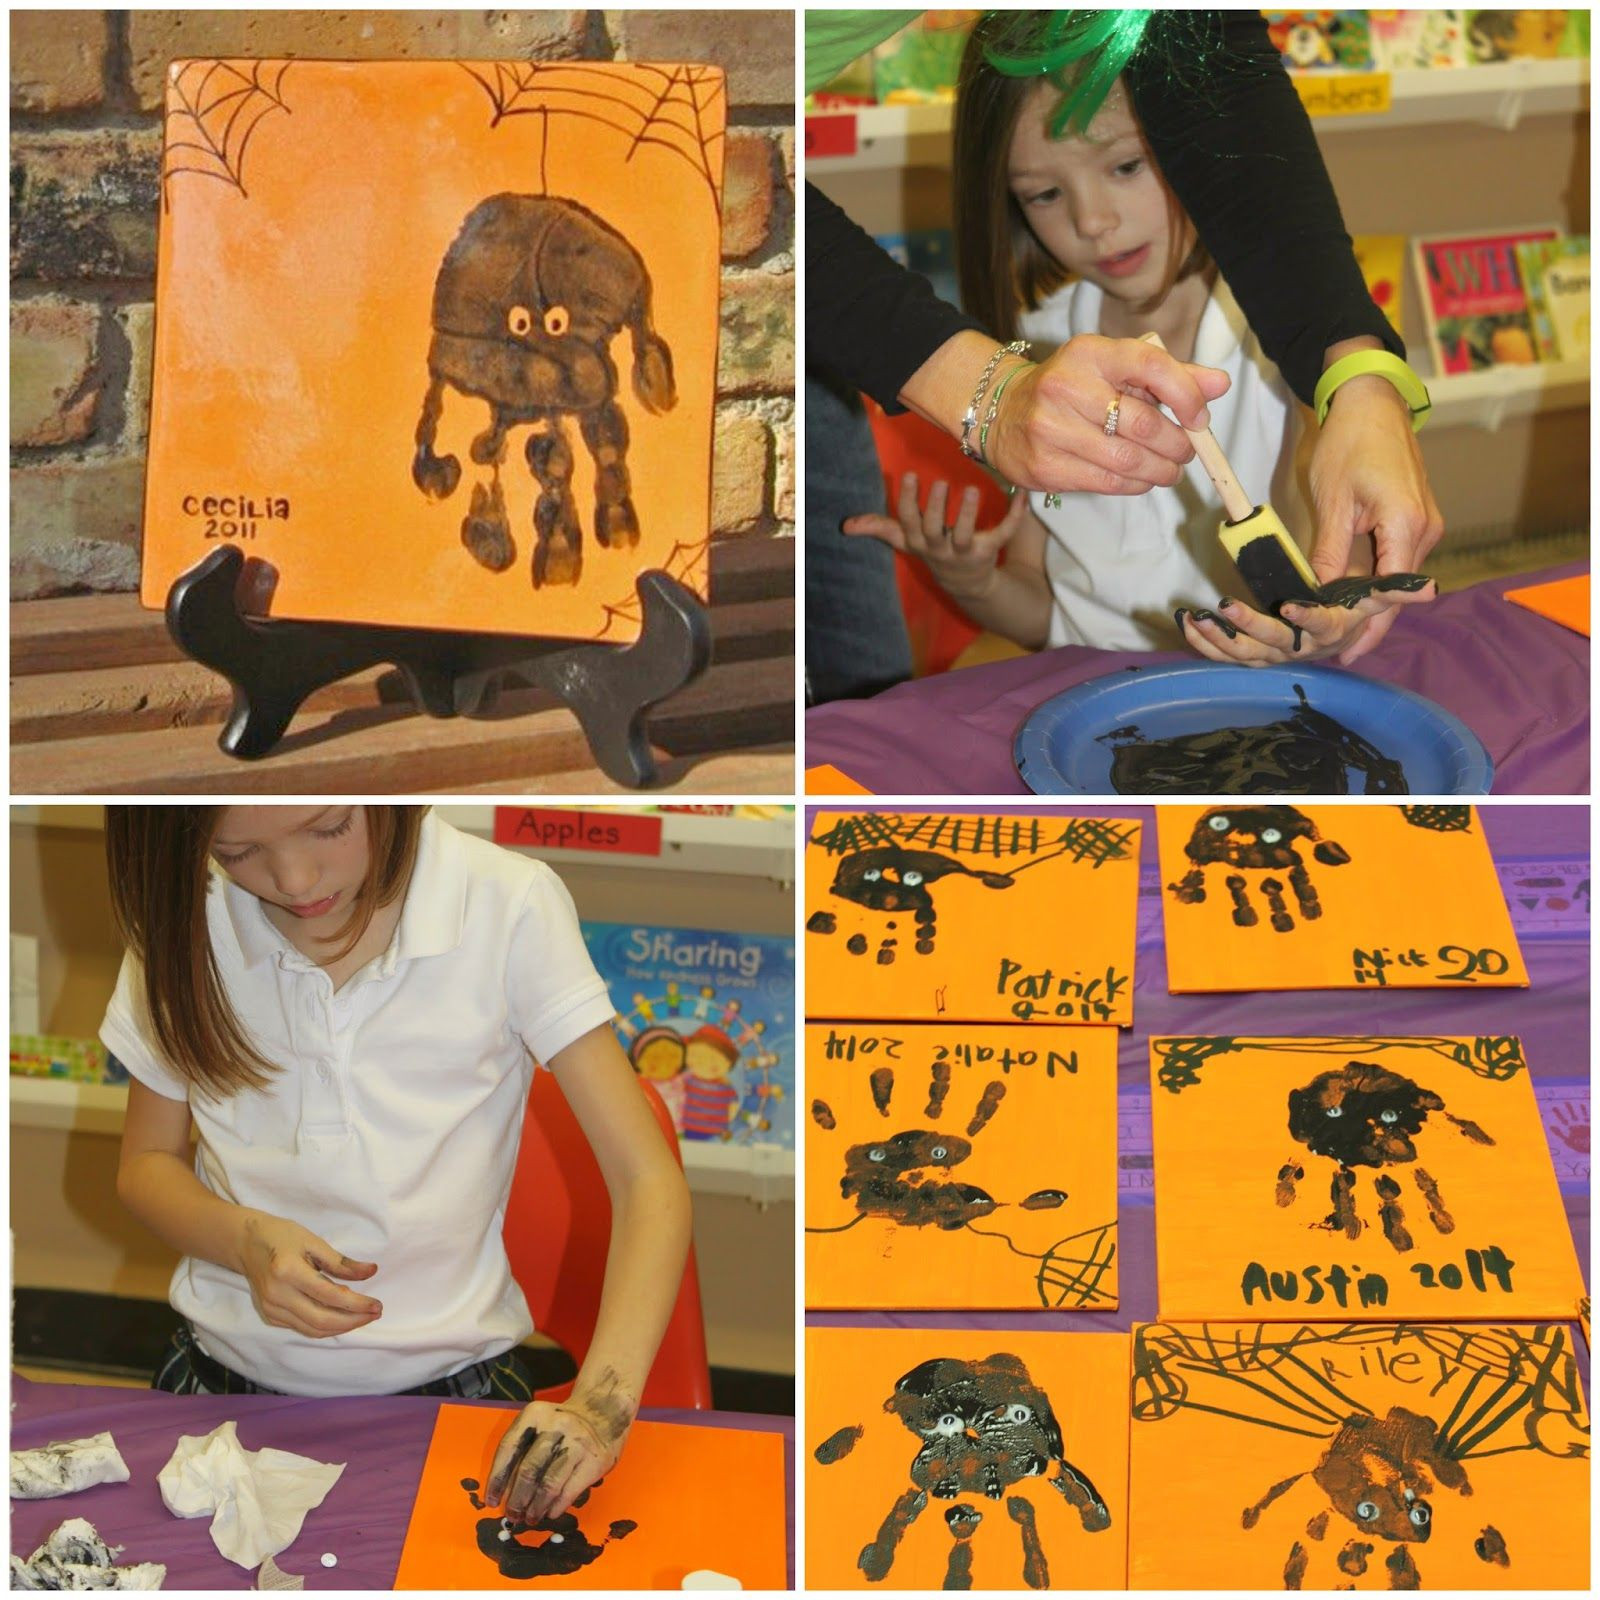 First Grade Halloween Party Ideas
 Keeping up with the Kiddos 1st Grade Halloween Party